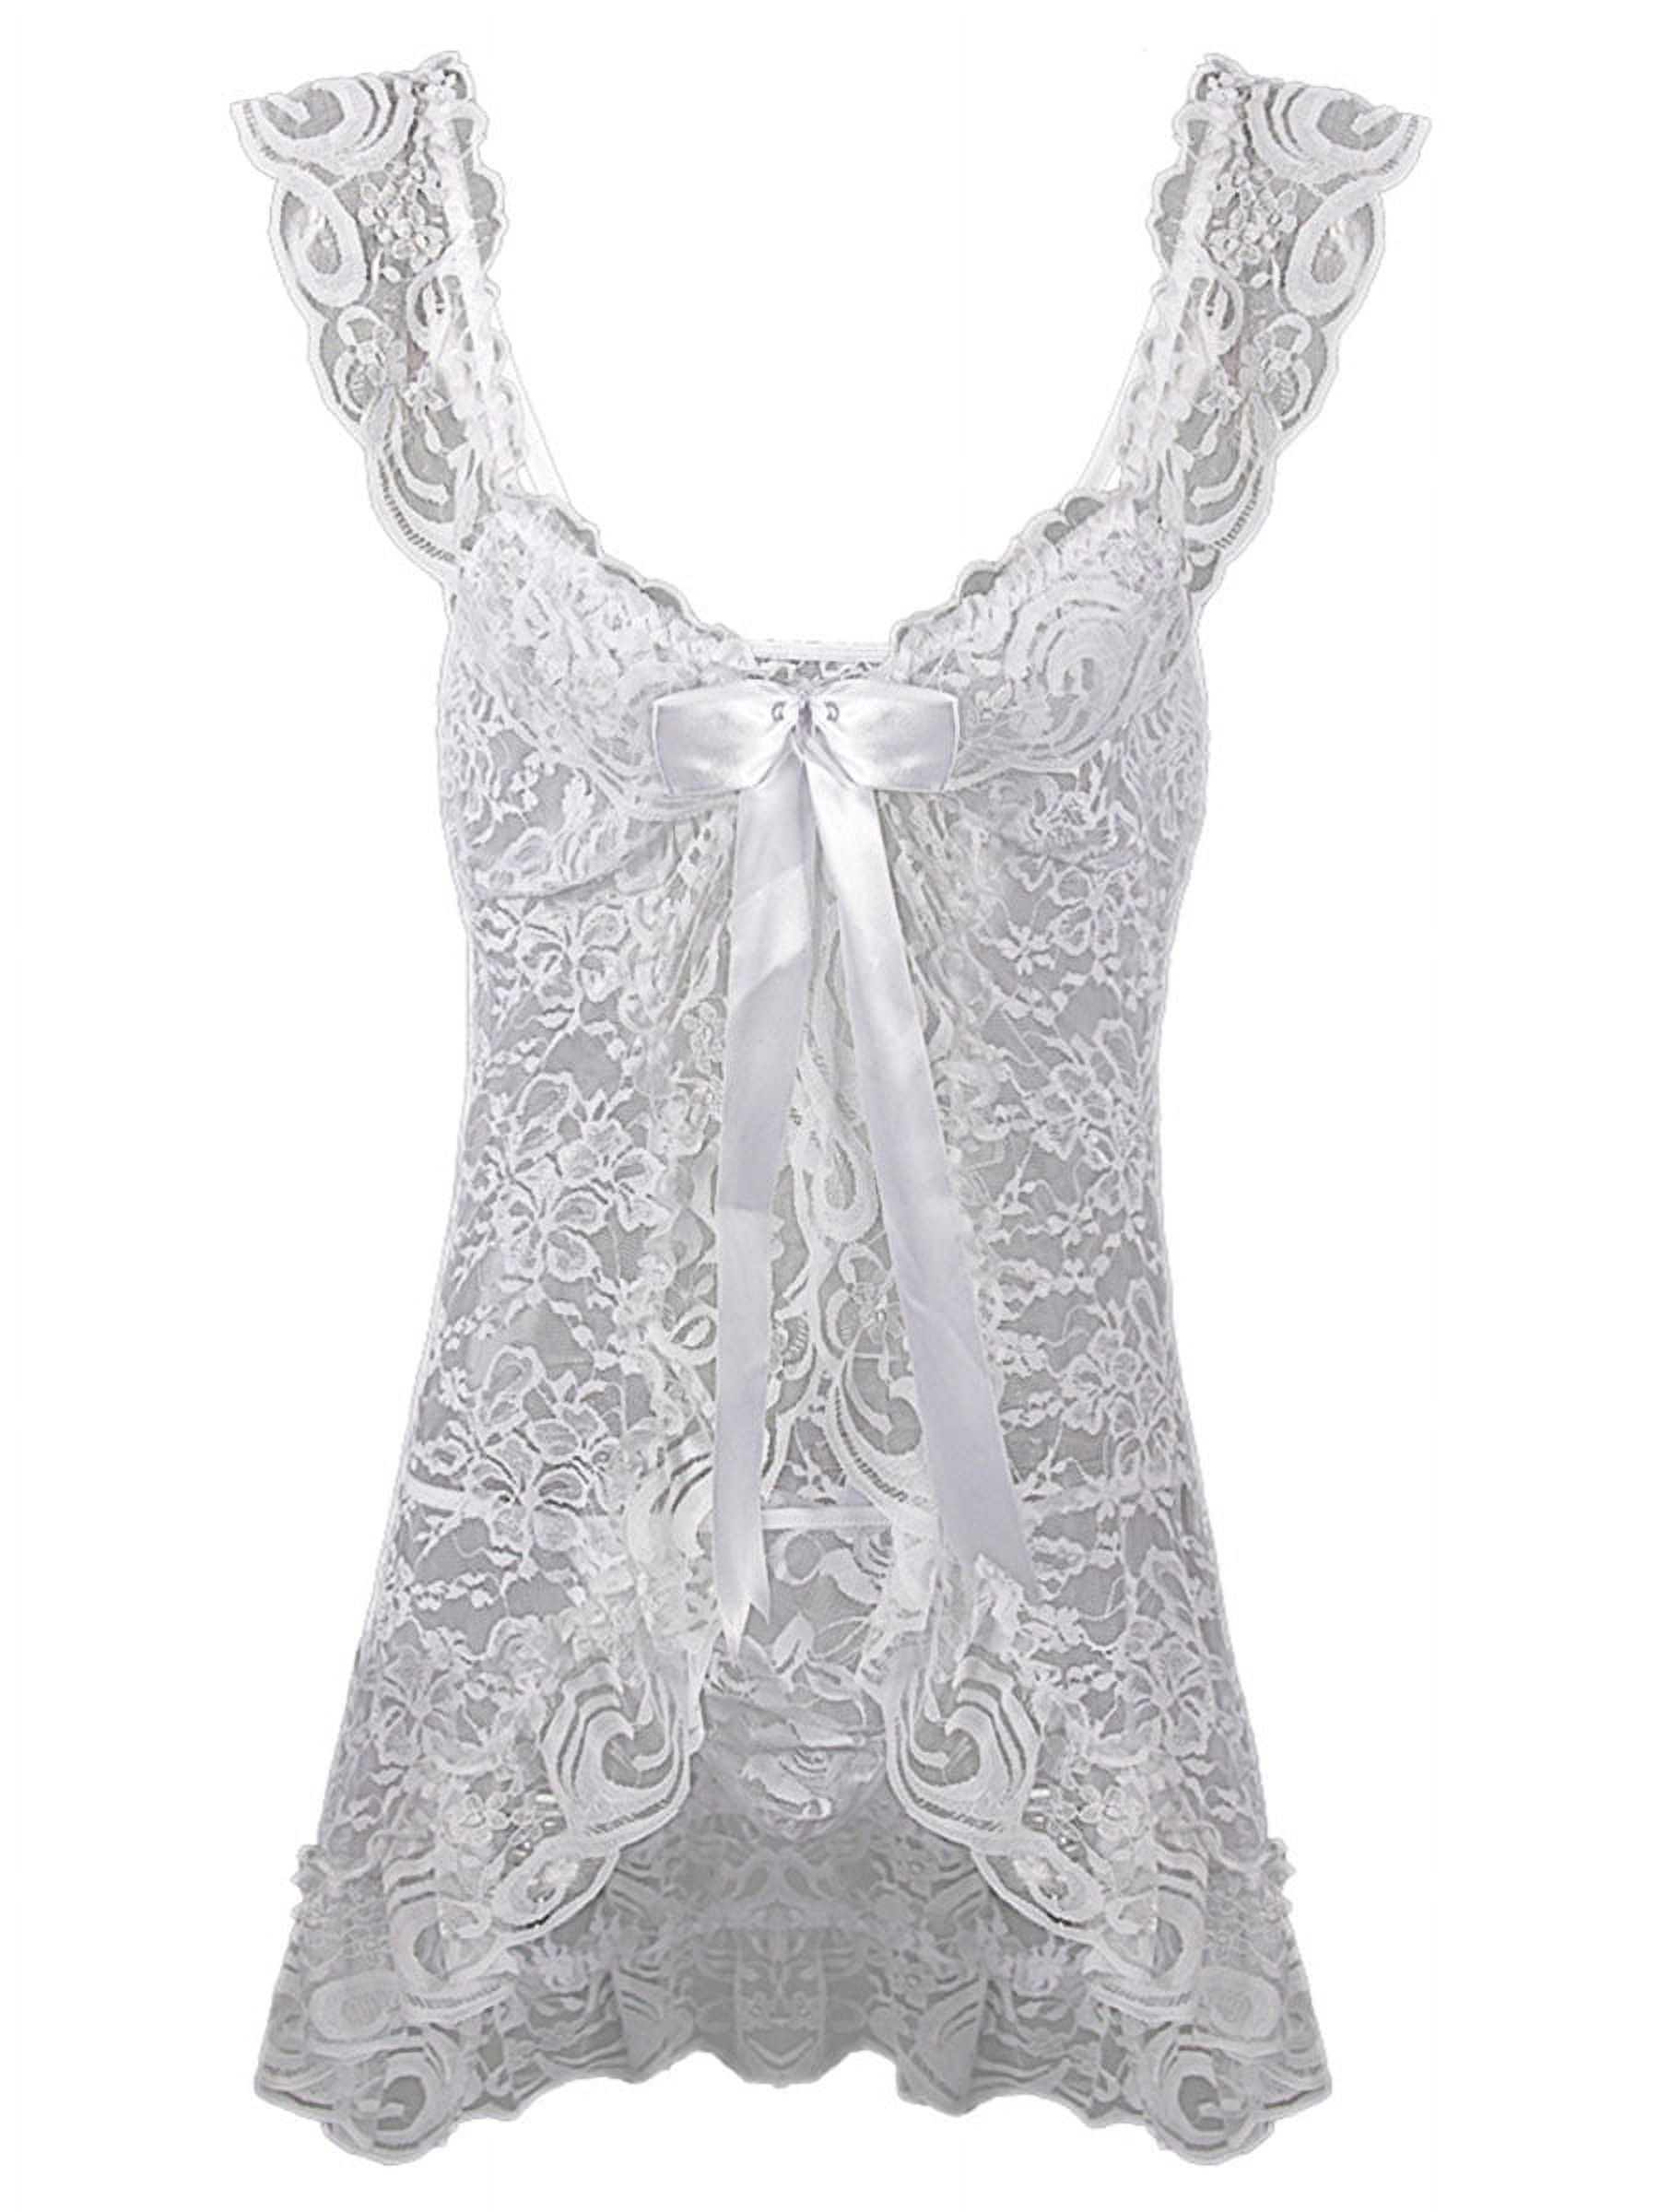 STARVNC Womens Chemise Lace Lingerie Babydoll Dress Sleepwear - image 3 of 6